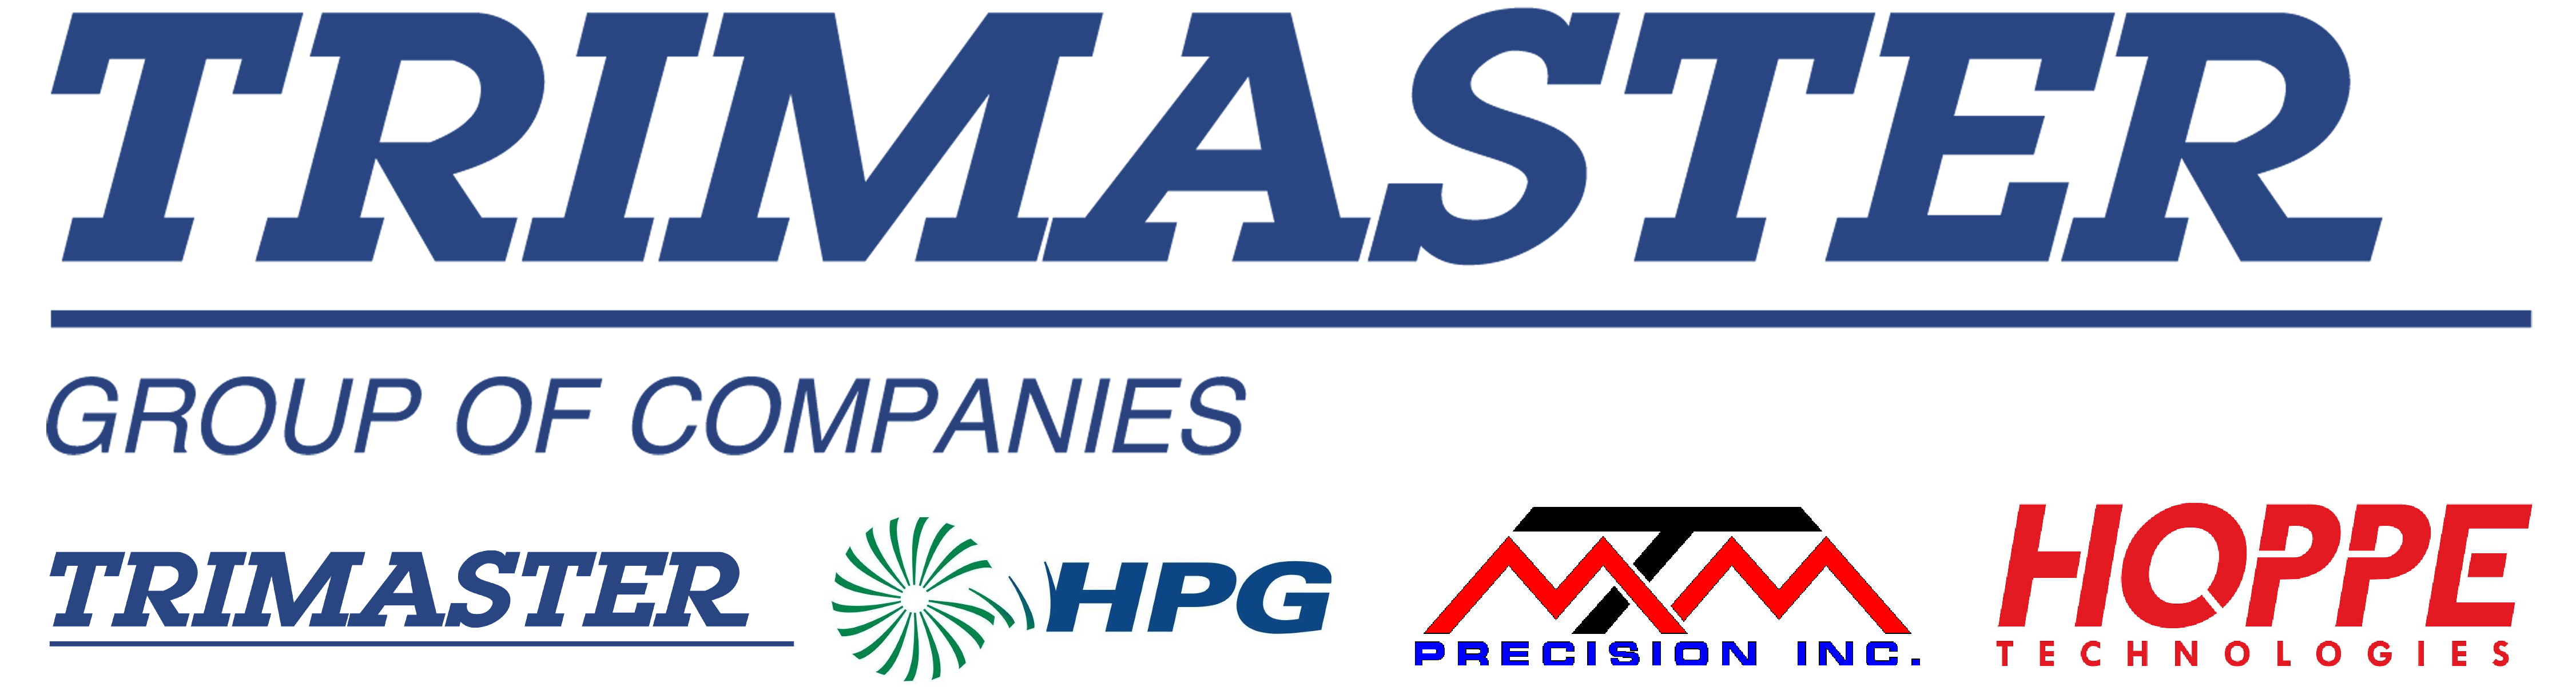 Trimaster Logo - Trimaster Group of Companies, ON